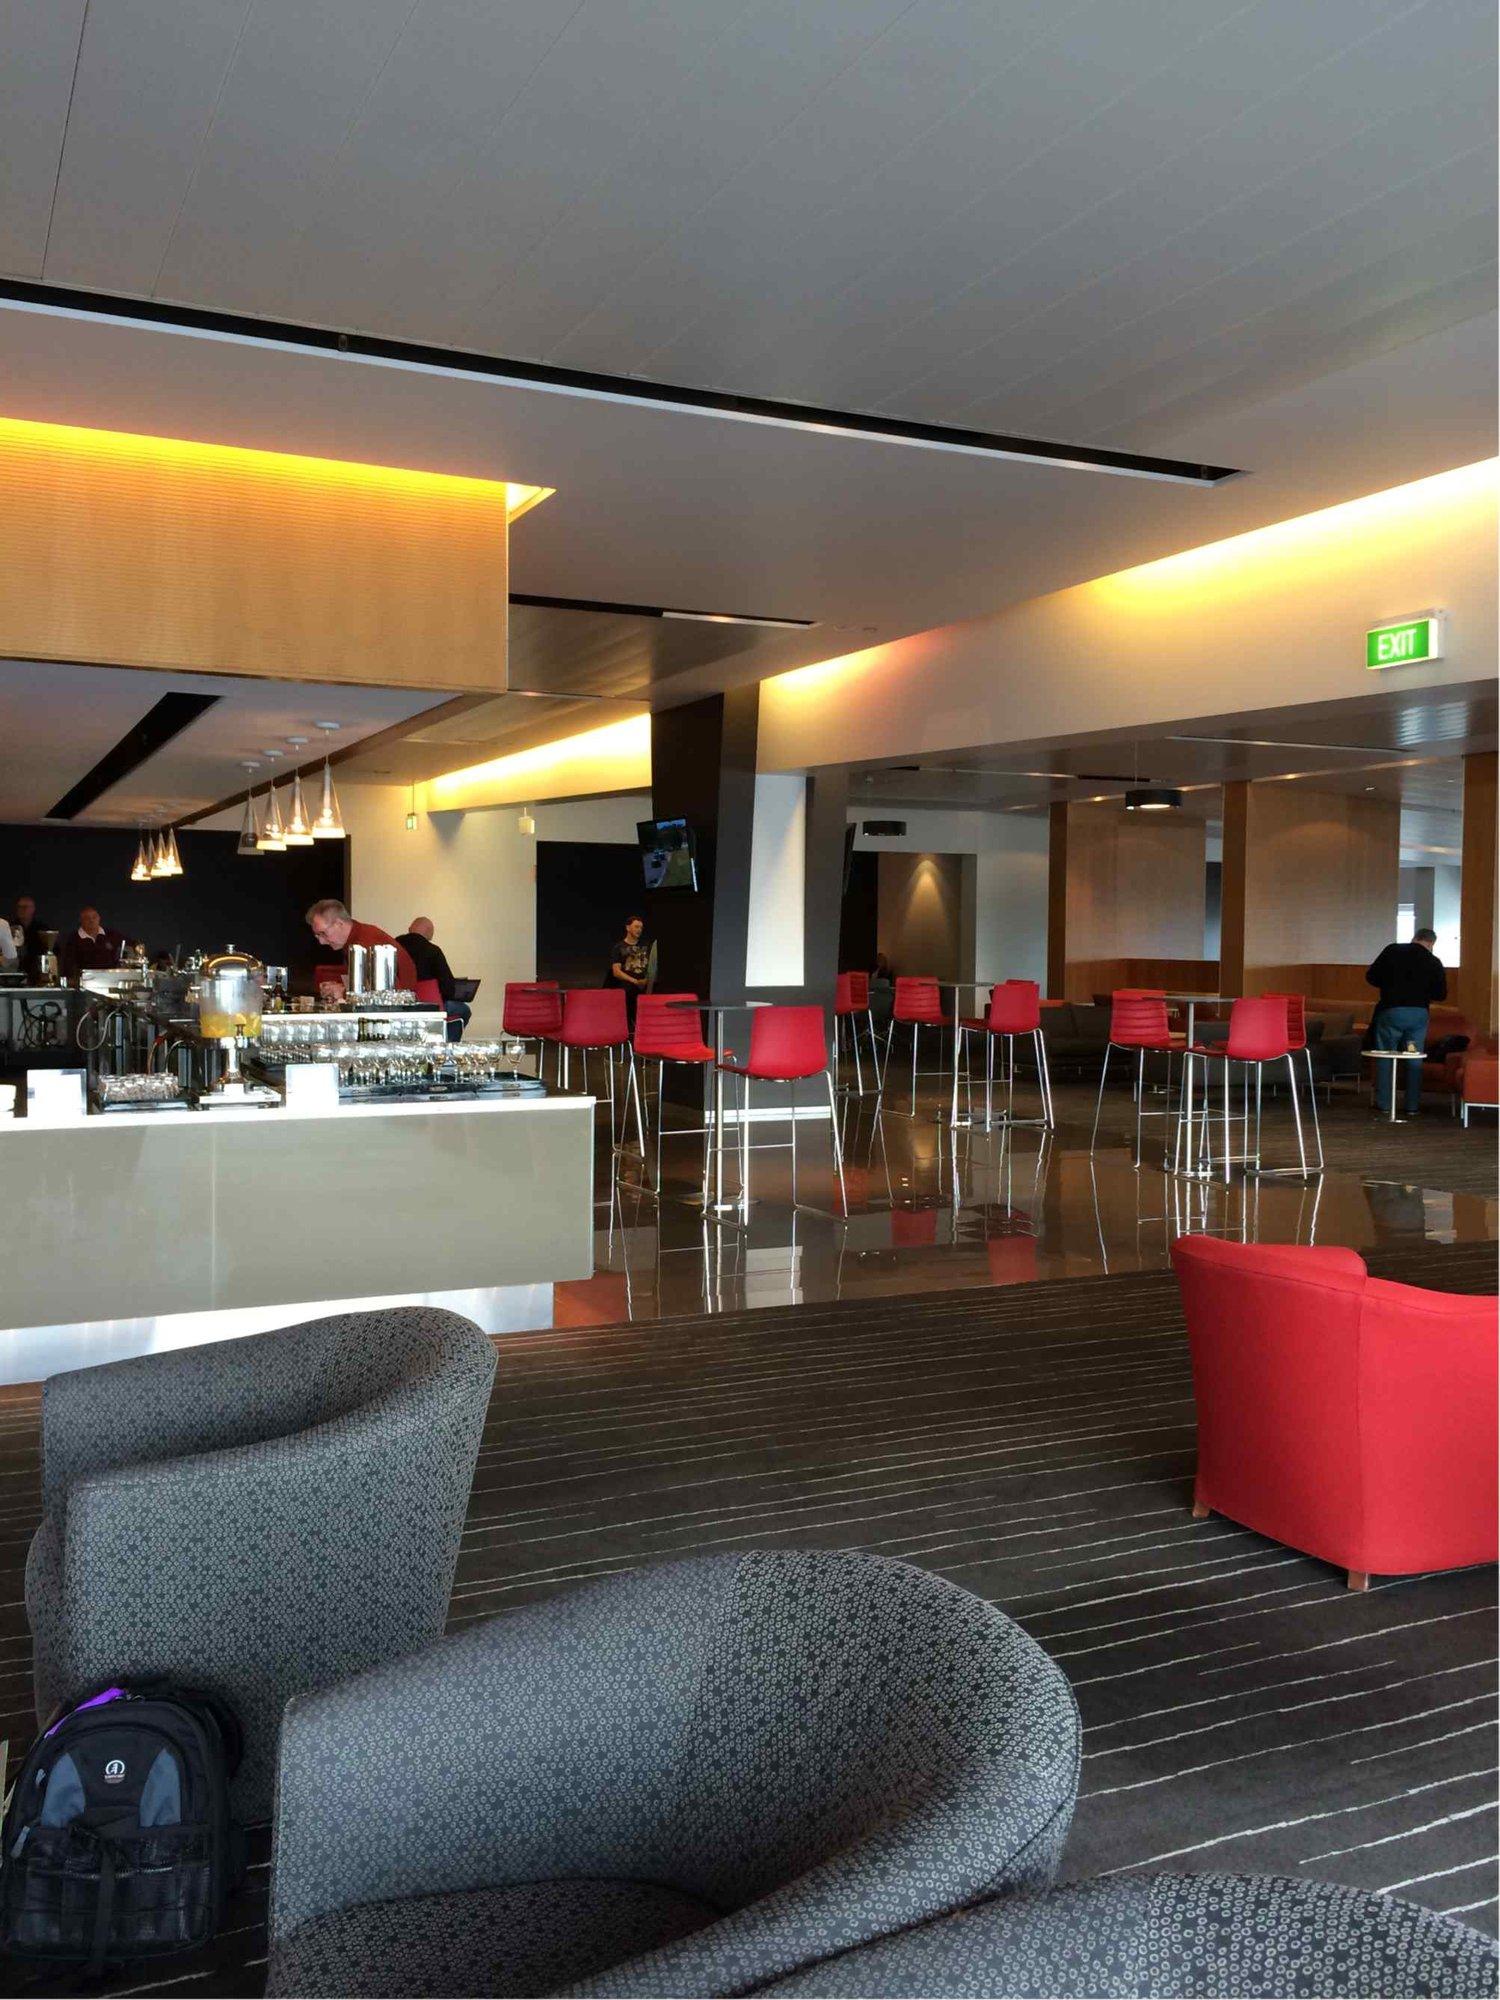 Qantas Club (International Business Lounge) image 4 of 6